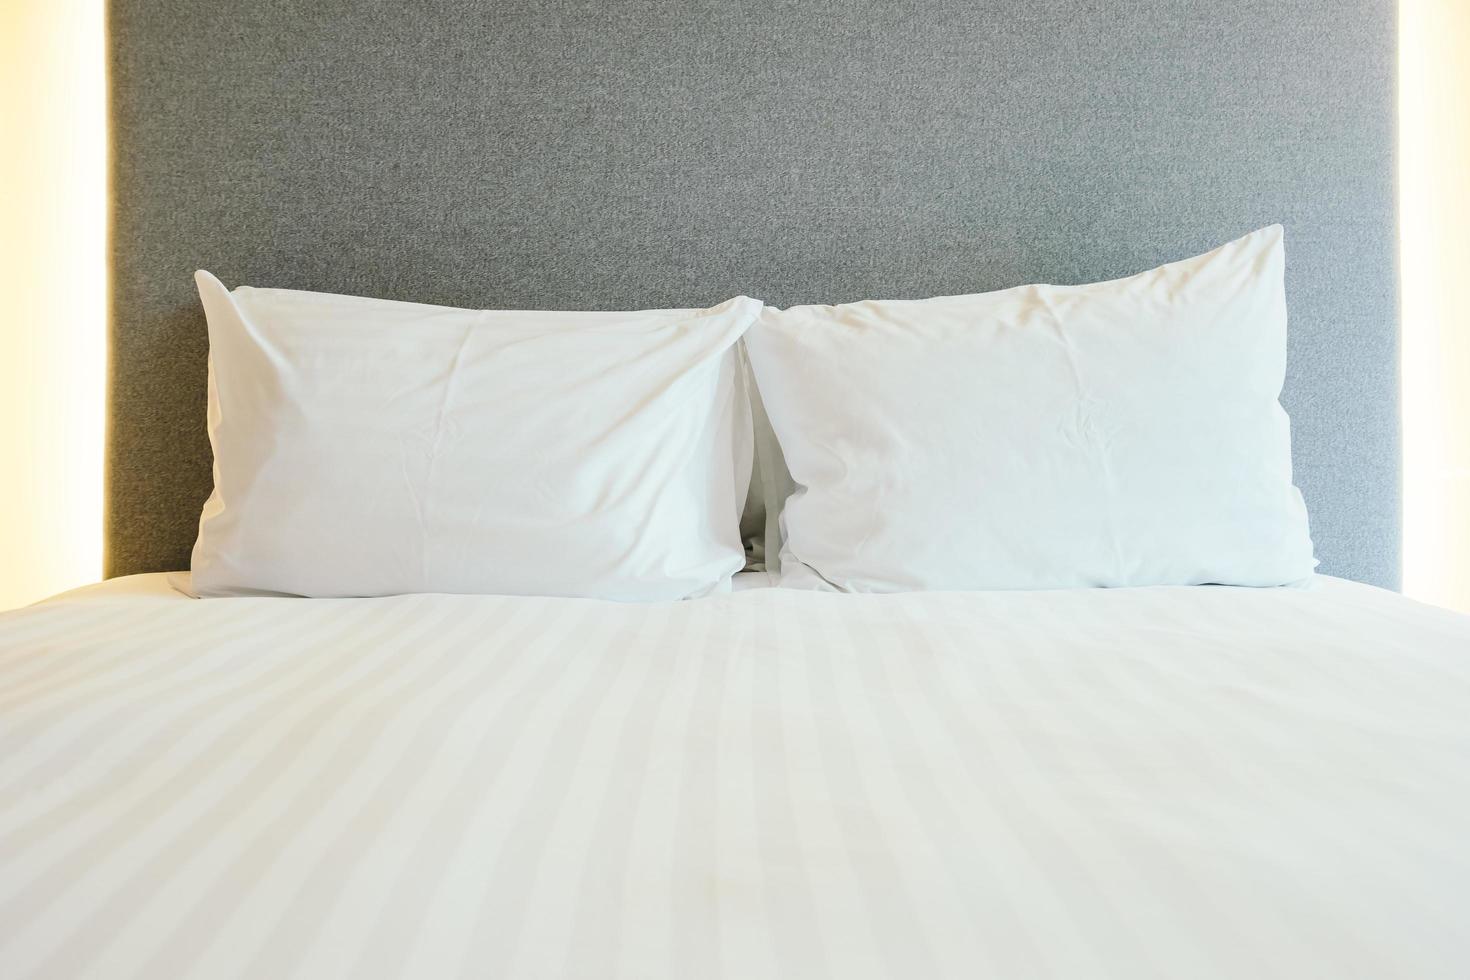 wit kussen op bed in de slaapkamer foto